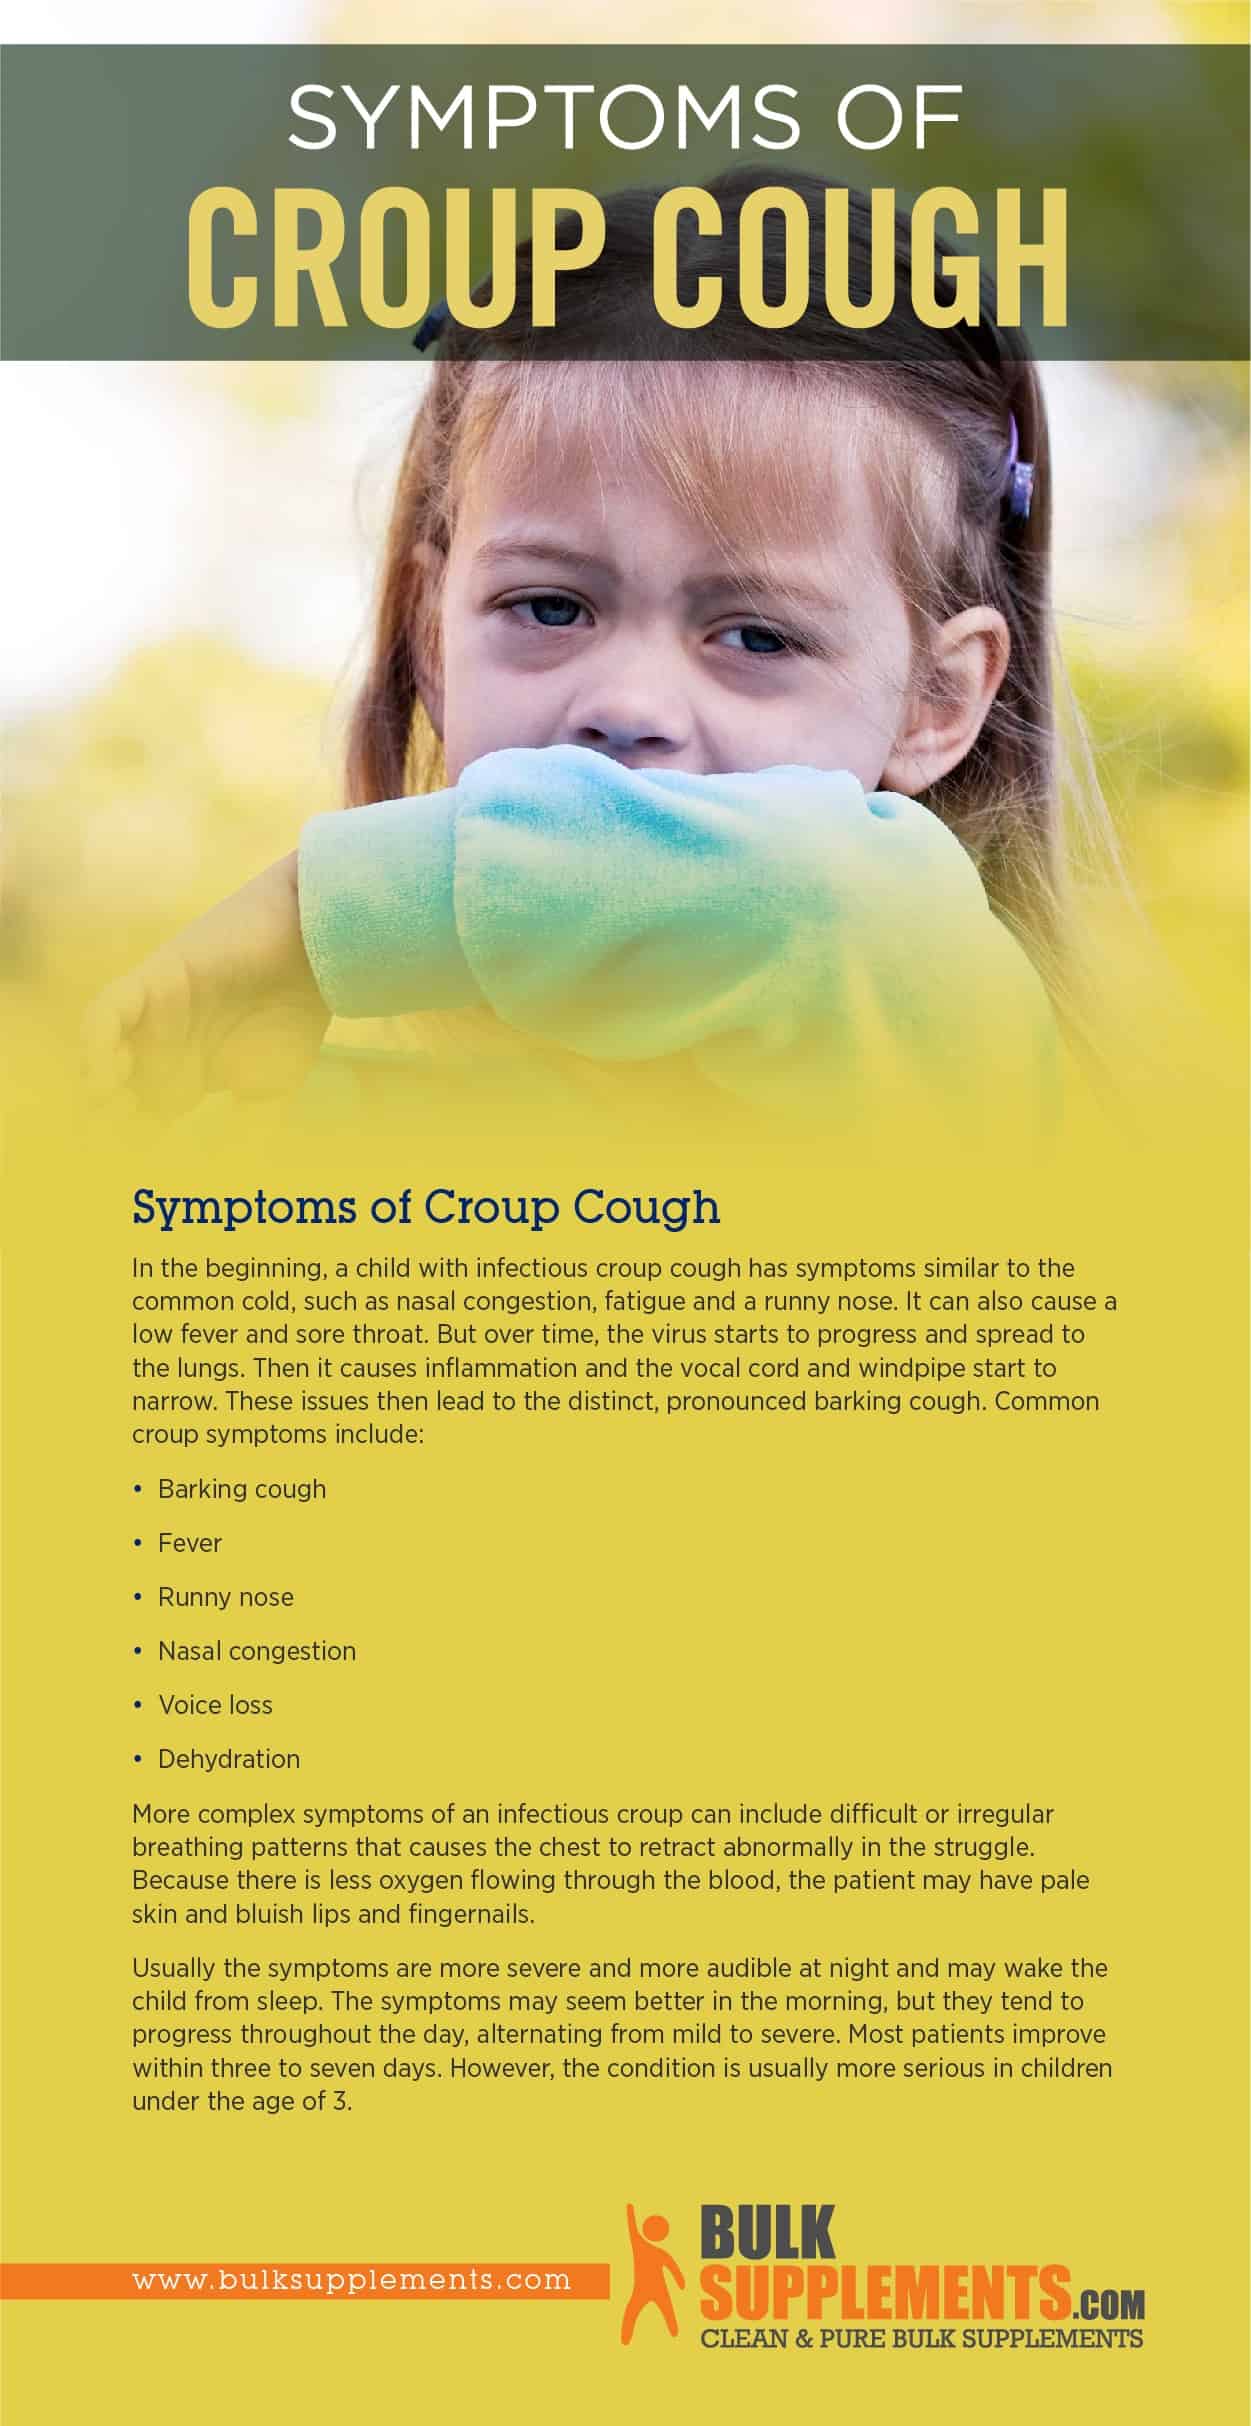 Symptoms of Croup Cough